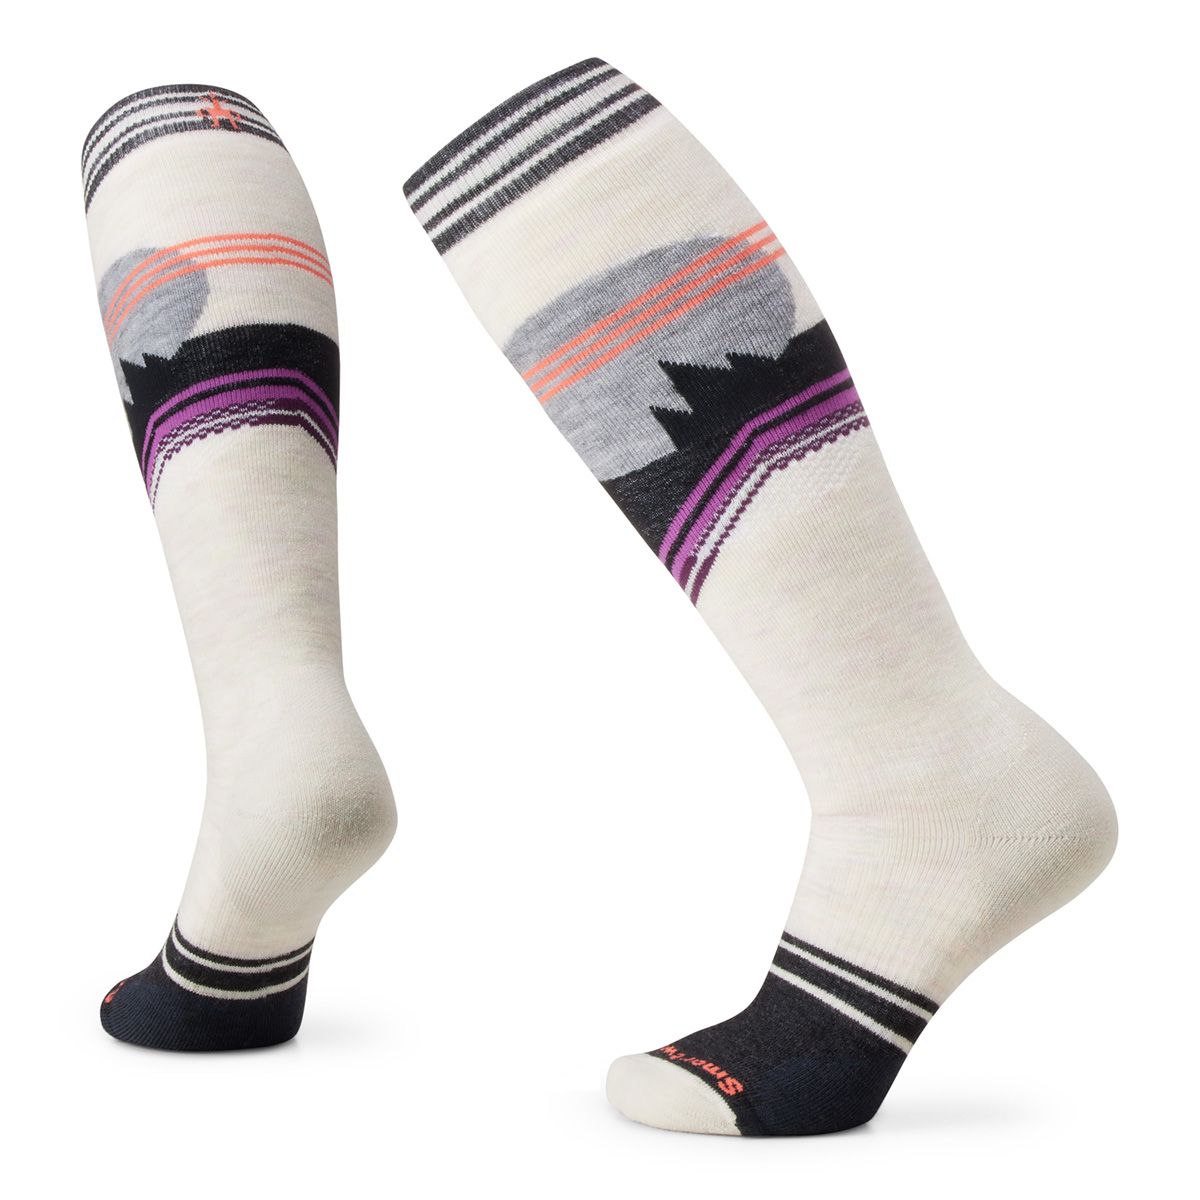 Unigear Ski Socks, Winter Snowbord Socks for Skiing and Cold Weather